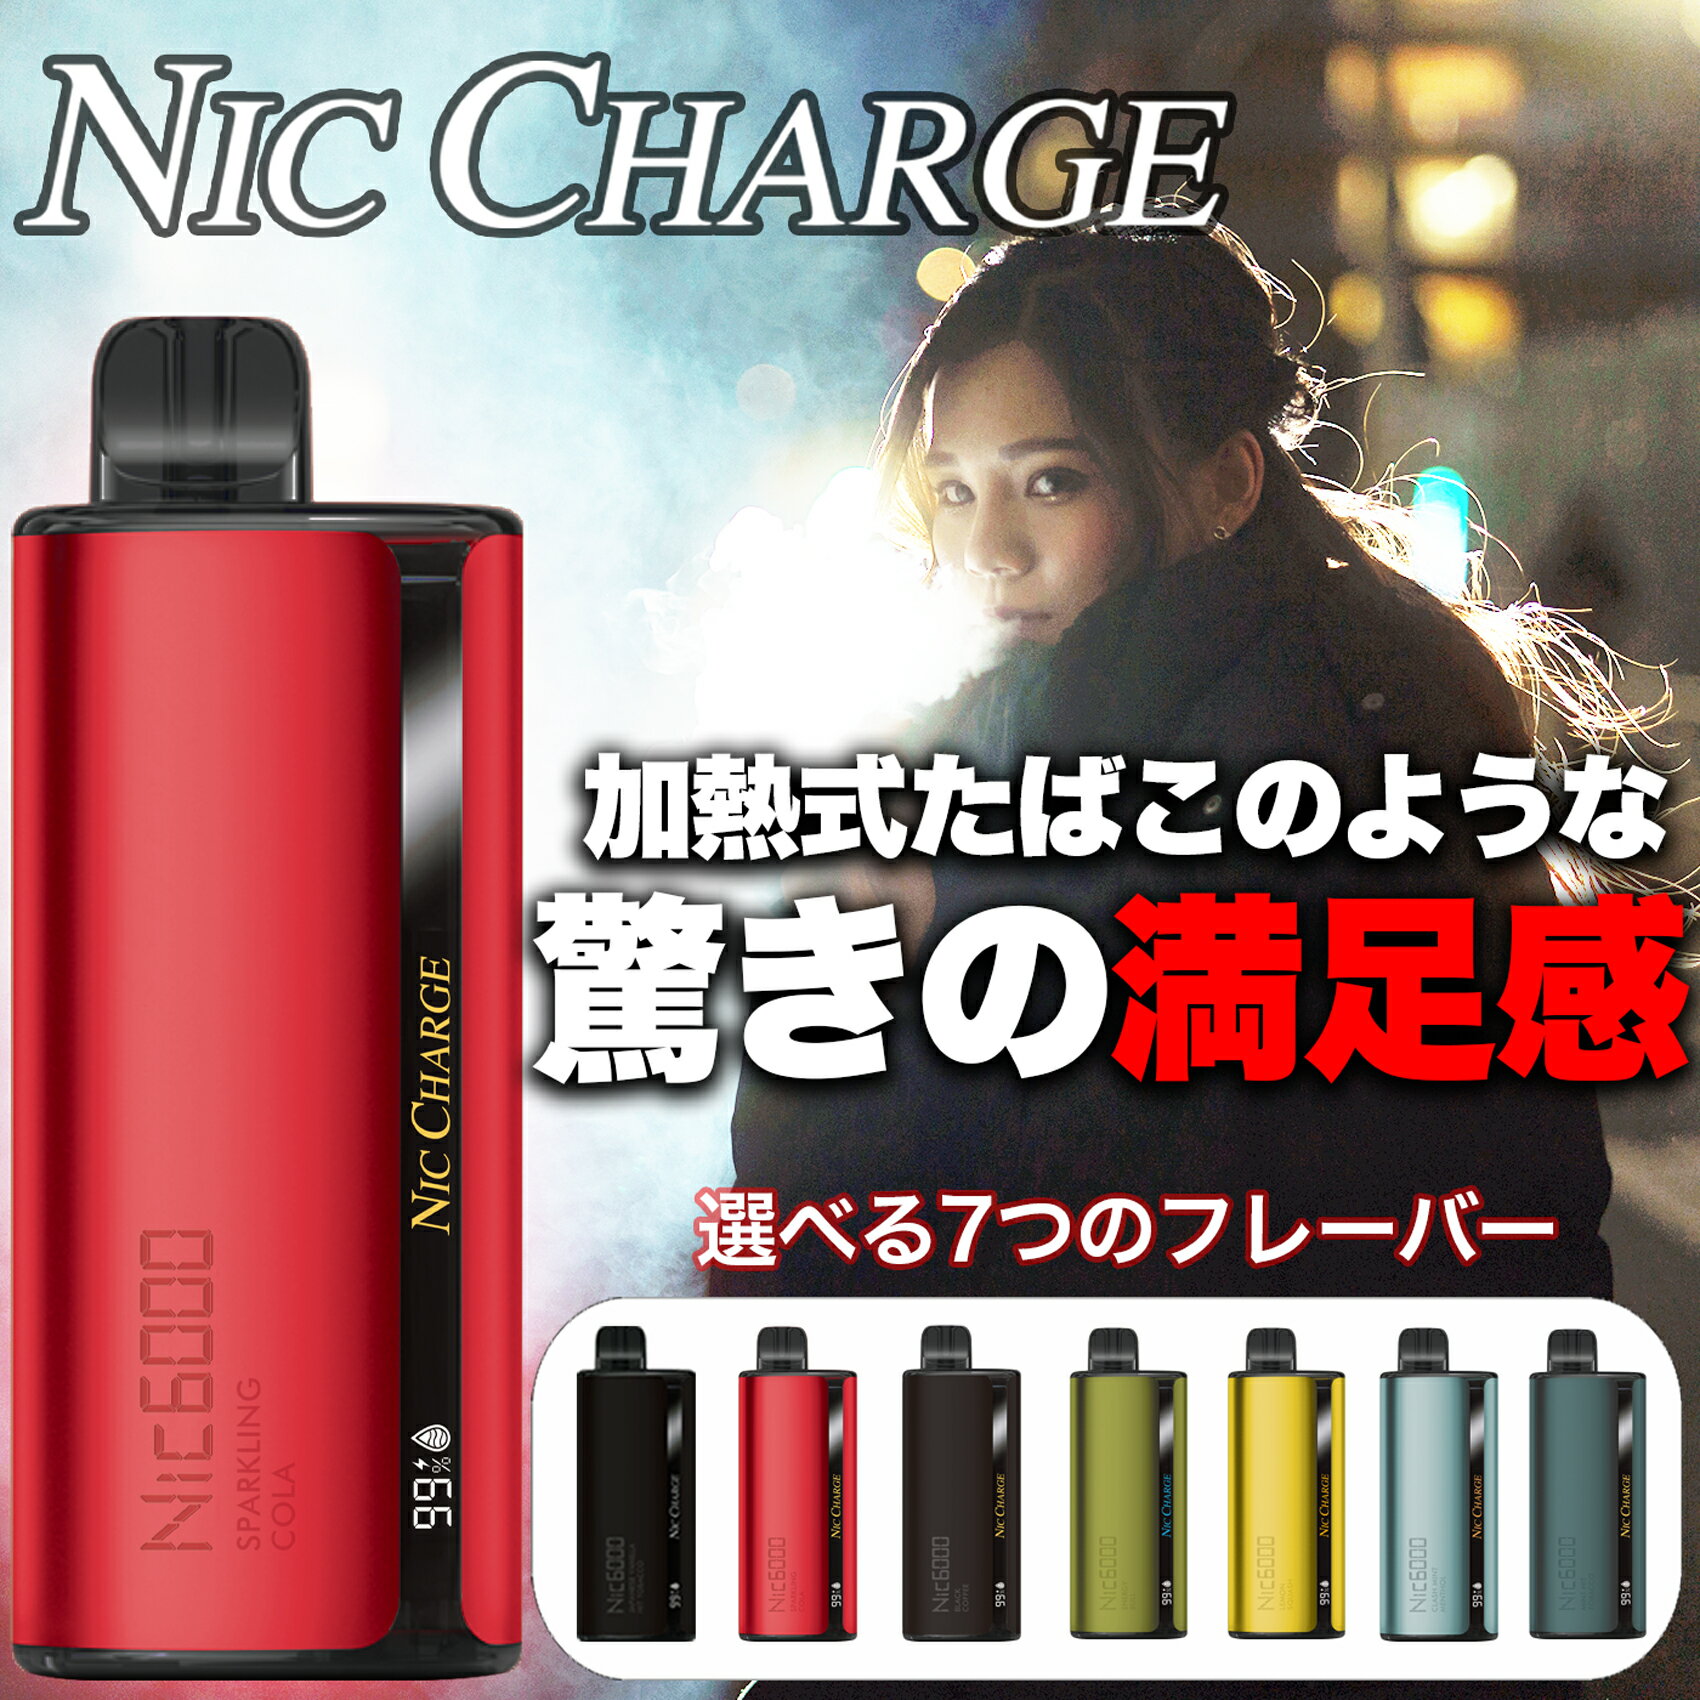 Nic Charge Nic6000 【商品レビューでもう1つプレゼント】 ニックチャージ ニコチャージ ニック6000 NicCharge 電子…